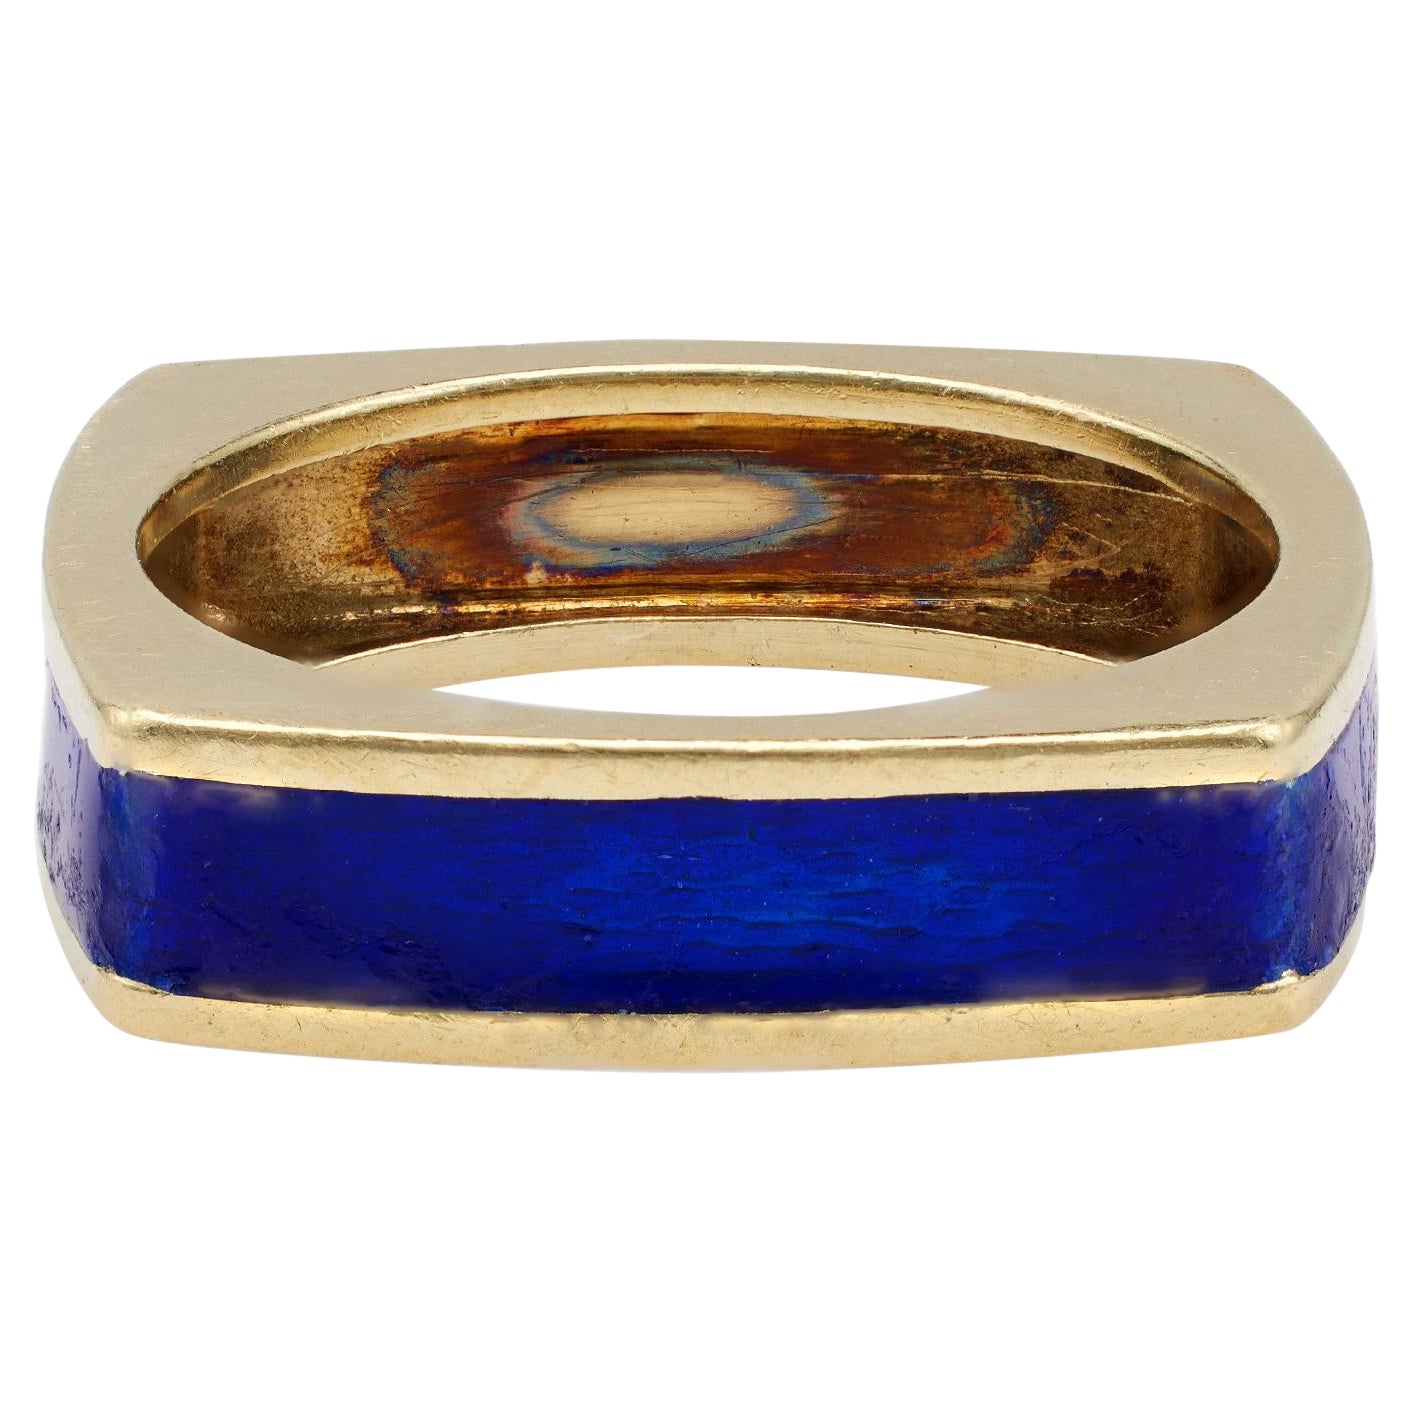 Vintage Boris LeBeau Blue Enamel 14k Yellow Gold Ring